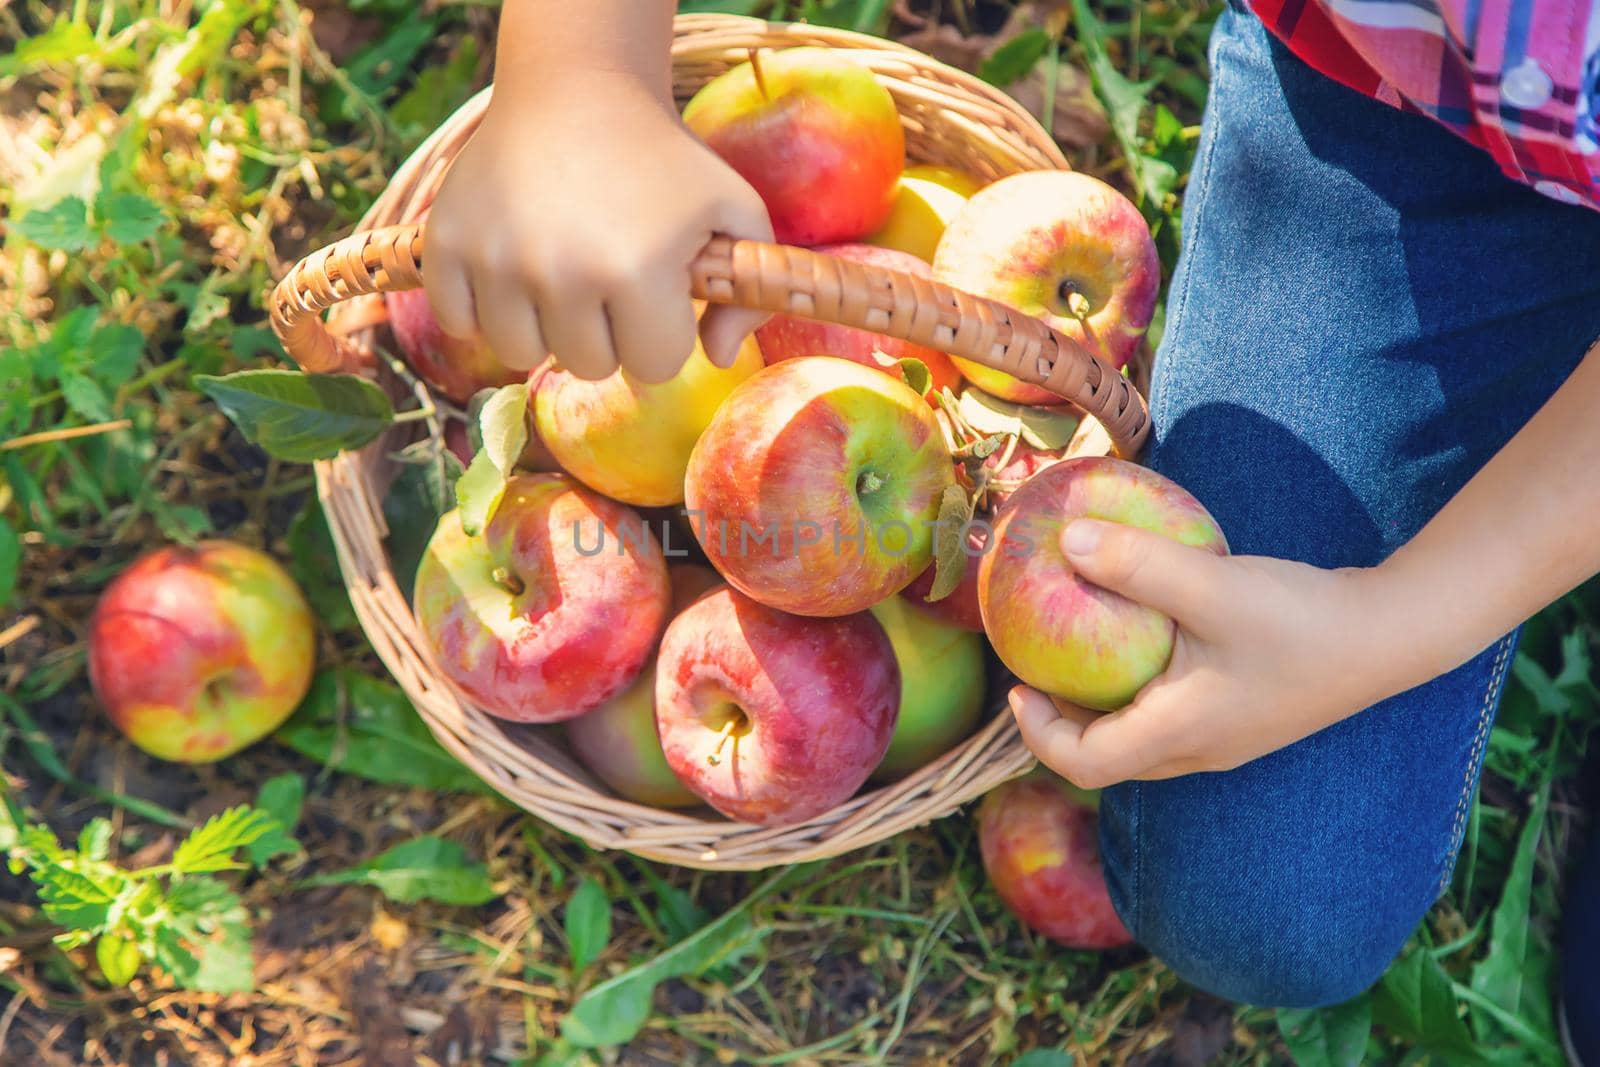 child picks apples in the garden in the garden. Selective focus. nature.